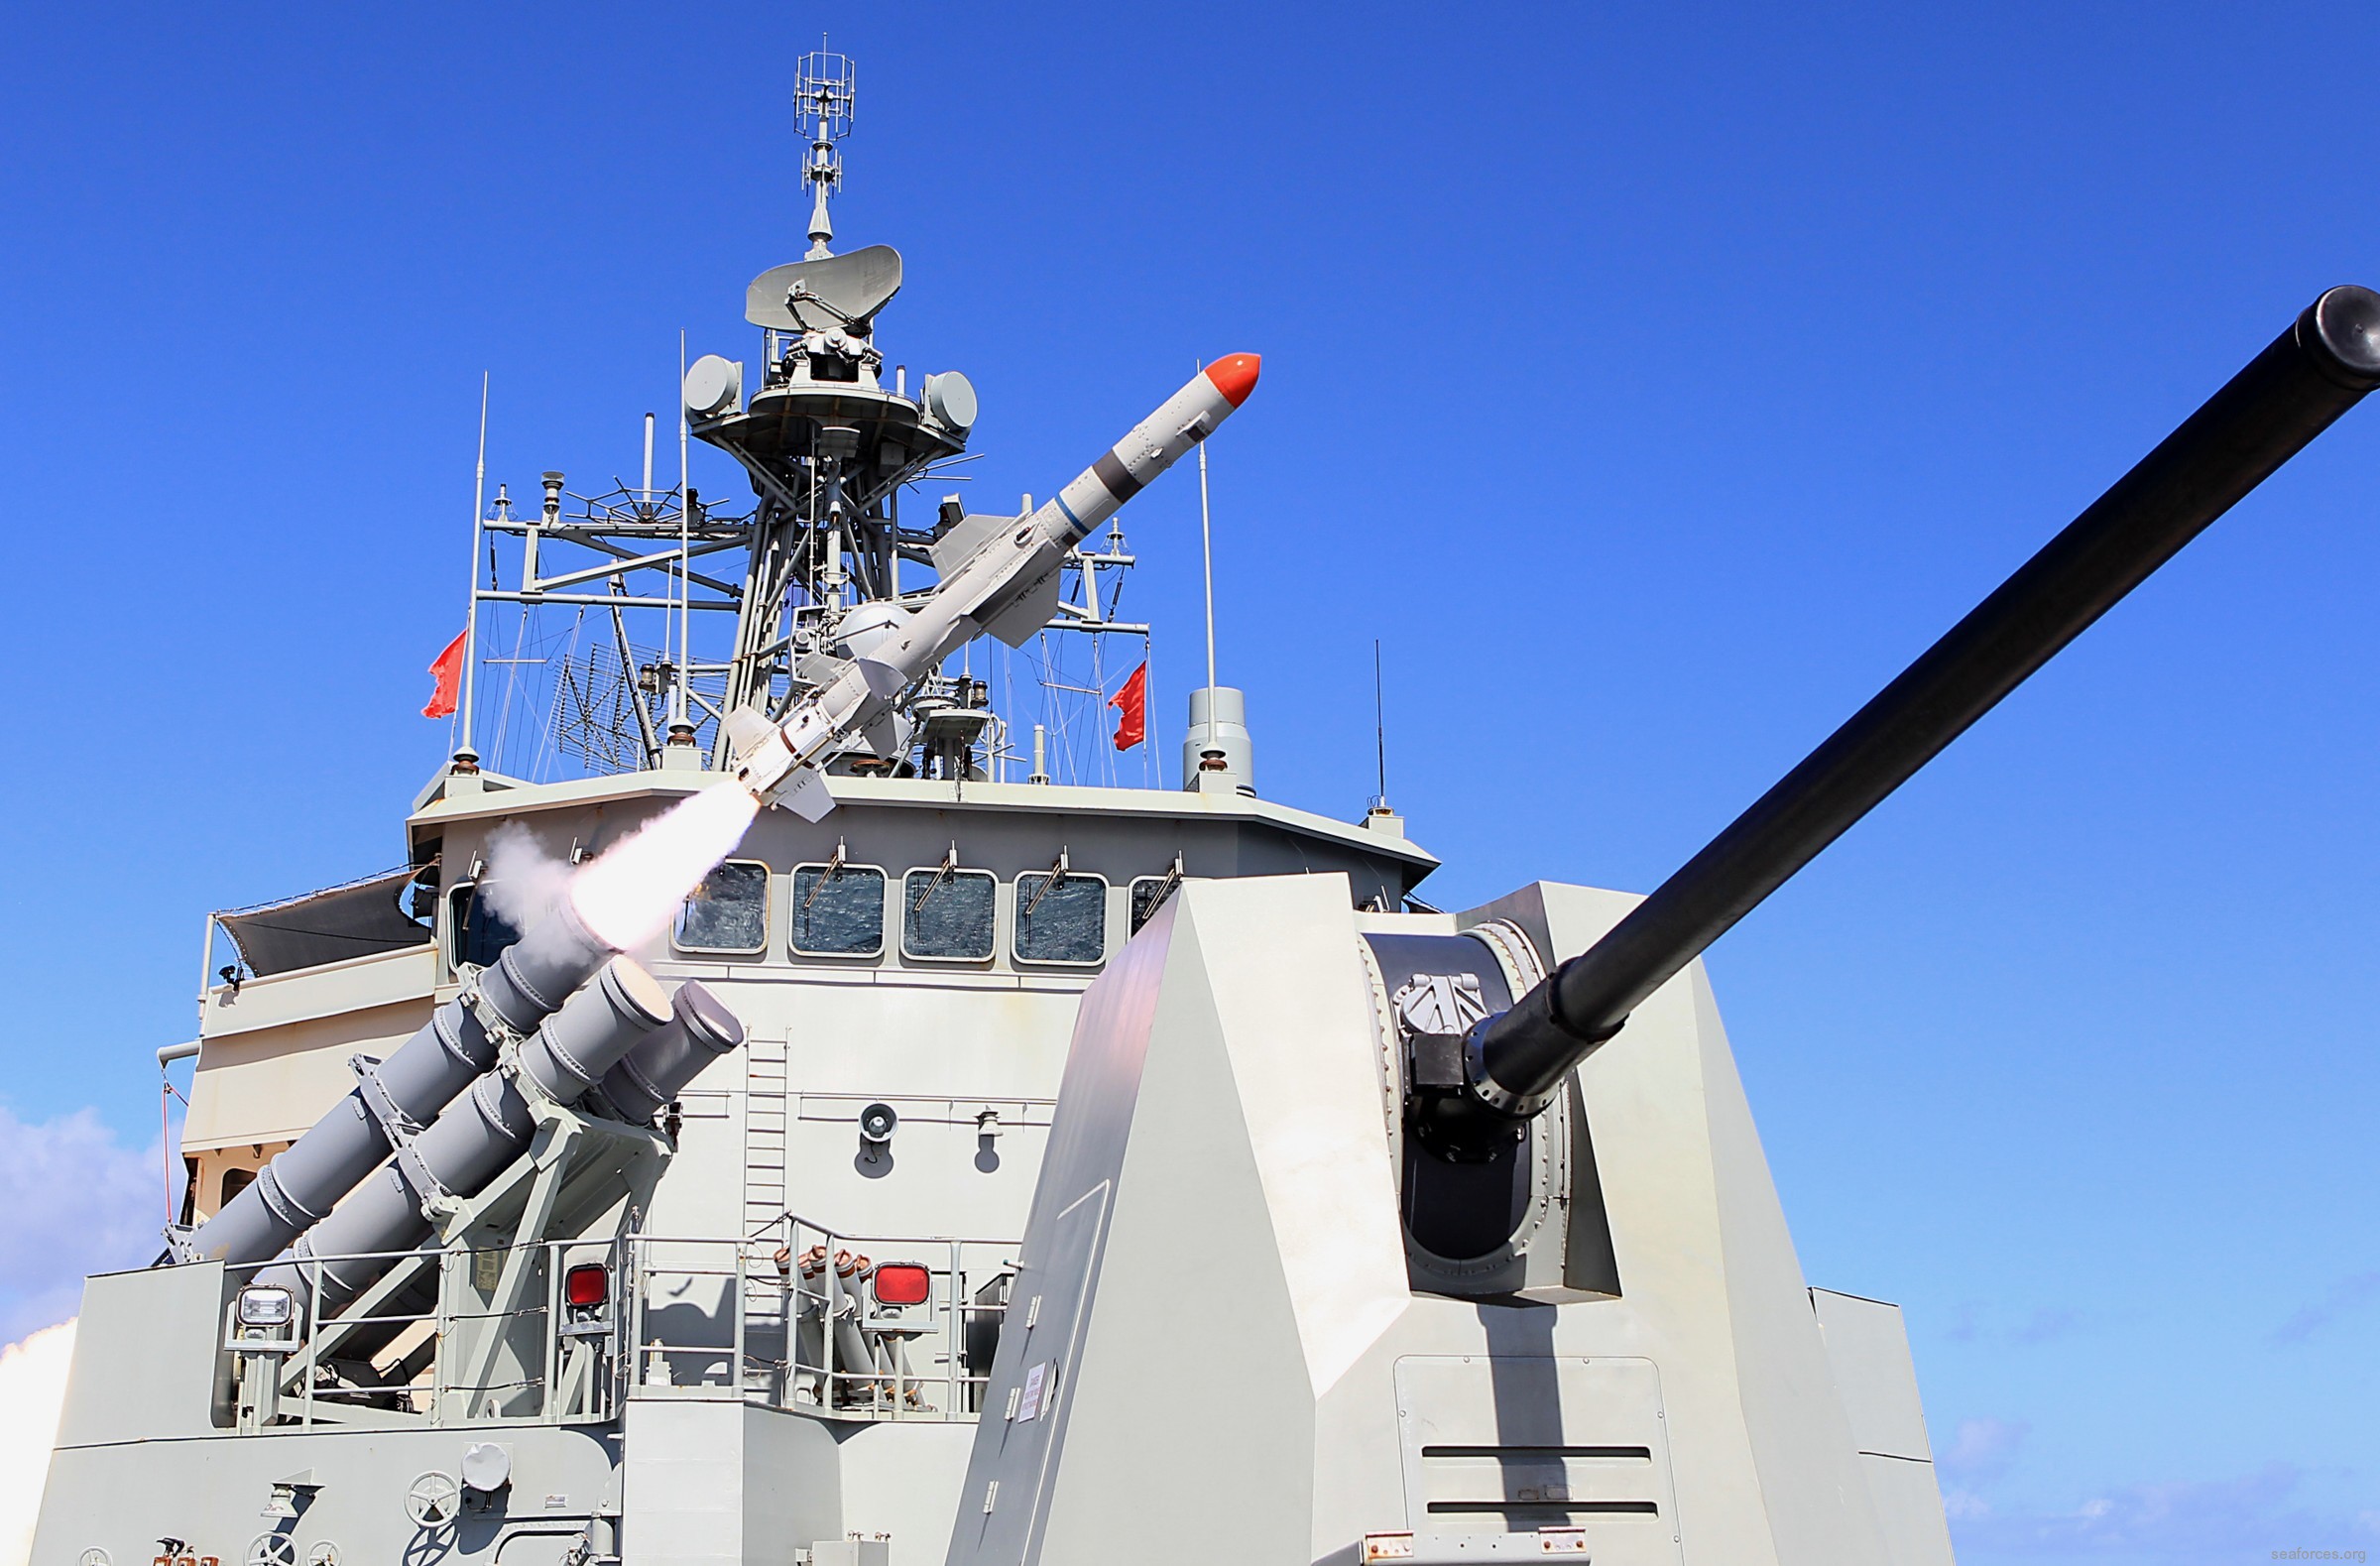 ffh-152 hmas warramunga anzac class frigate royal australian navy 2010 rgm-84 harpoon ssm missile launch rimpac